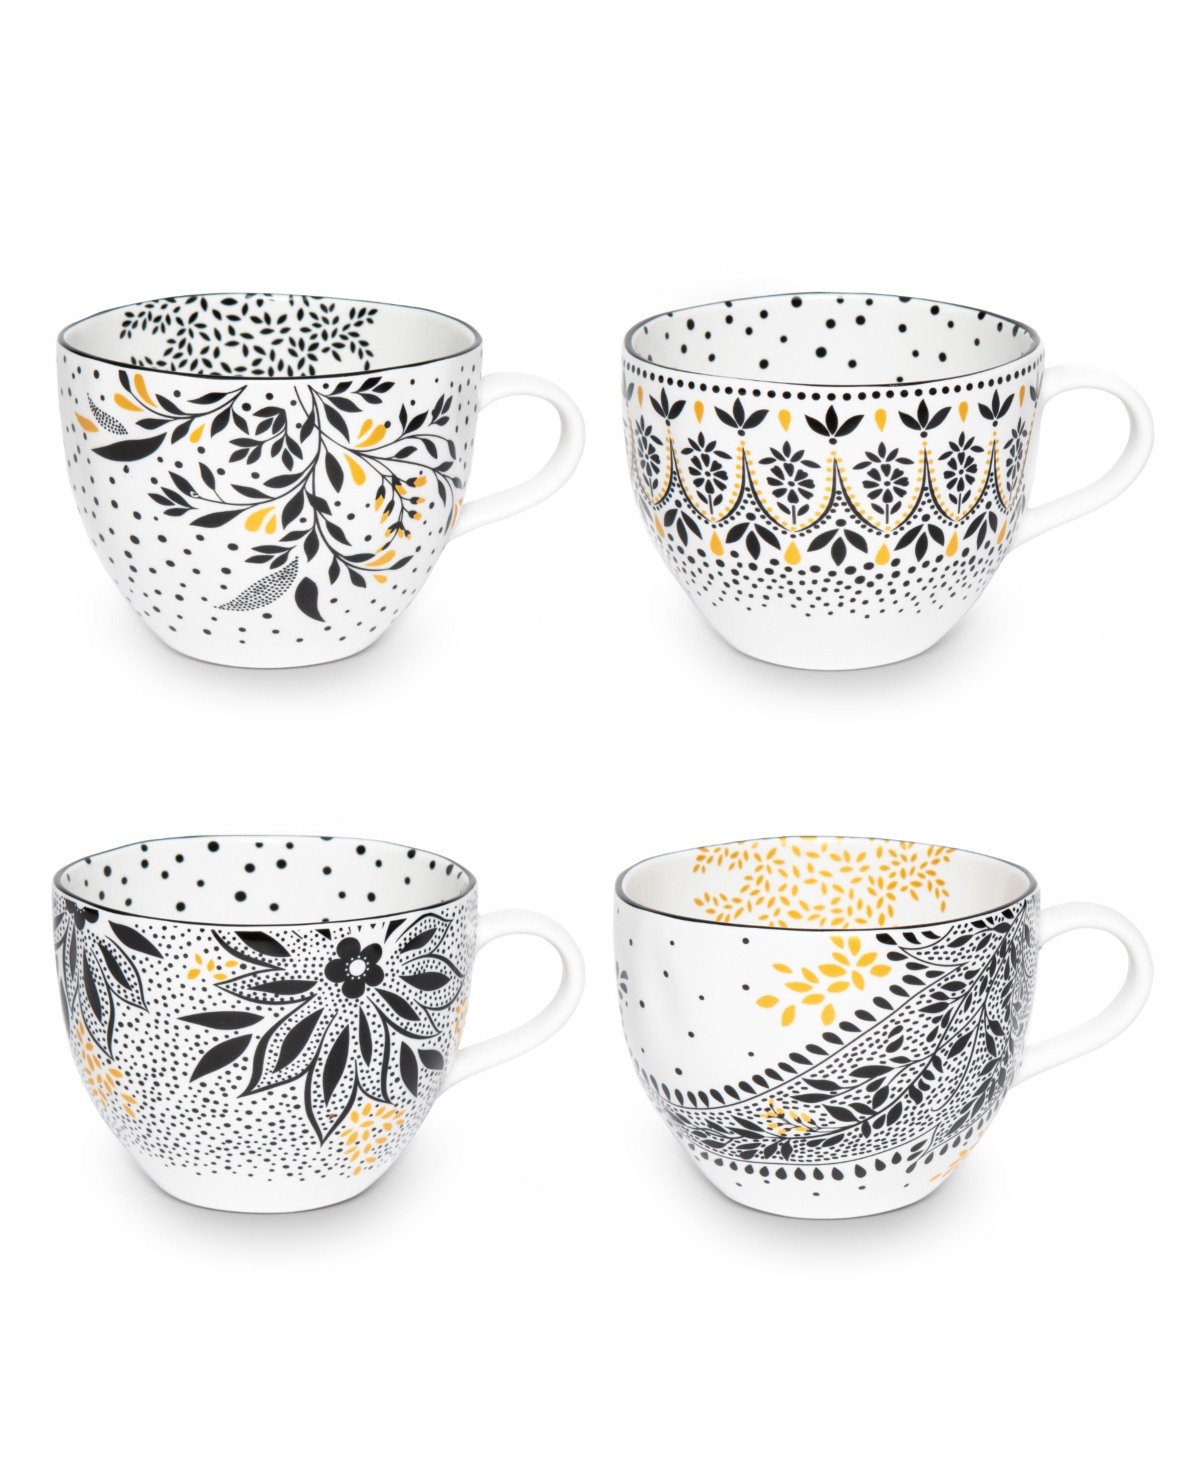 Sara Miller Artisanne Noir Mugs, Set of 4 - White